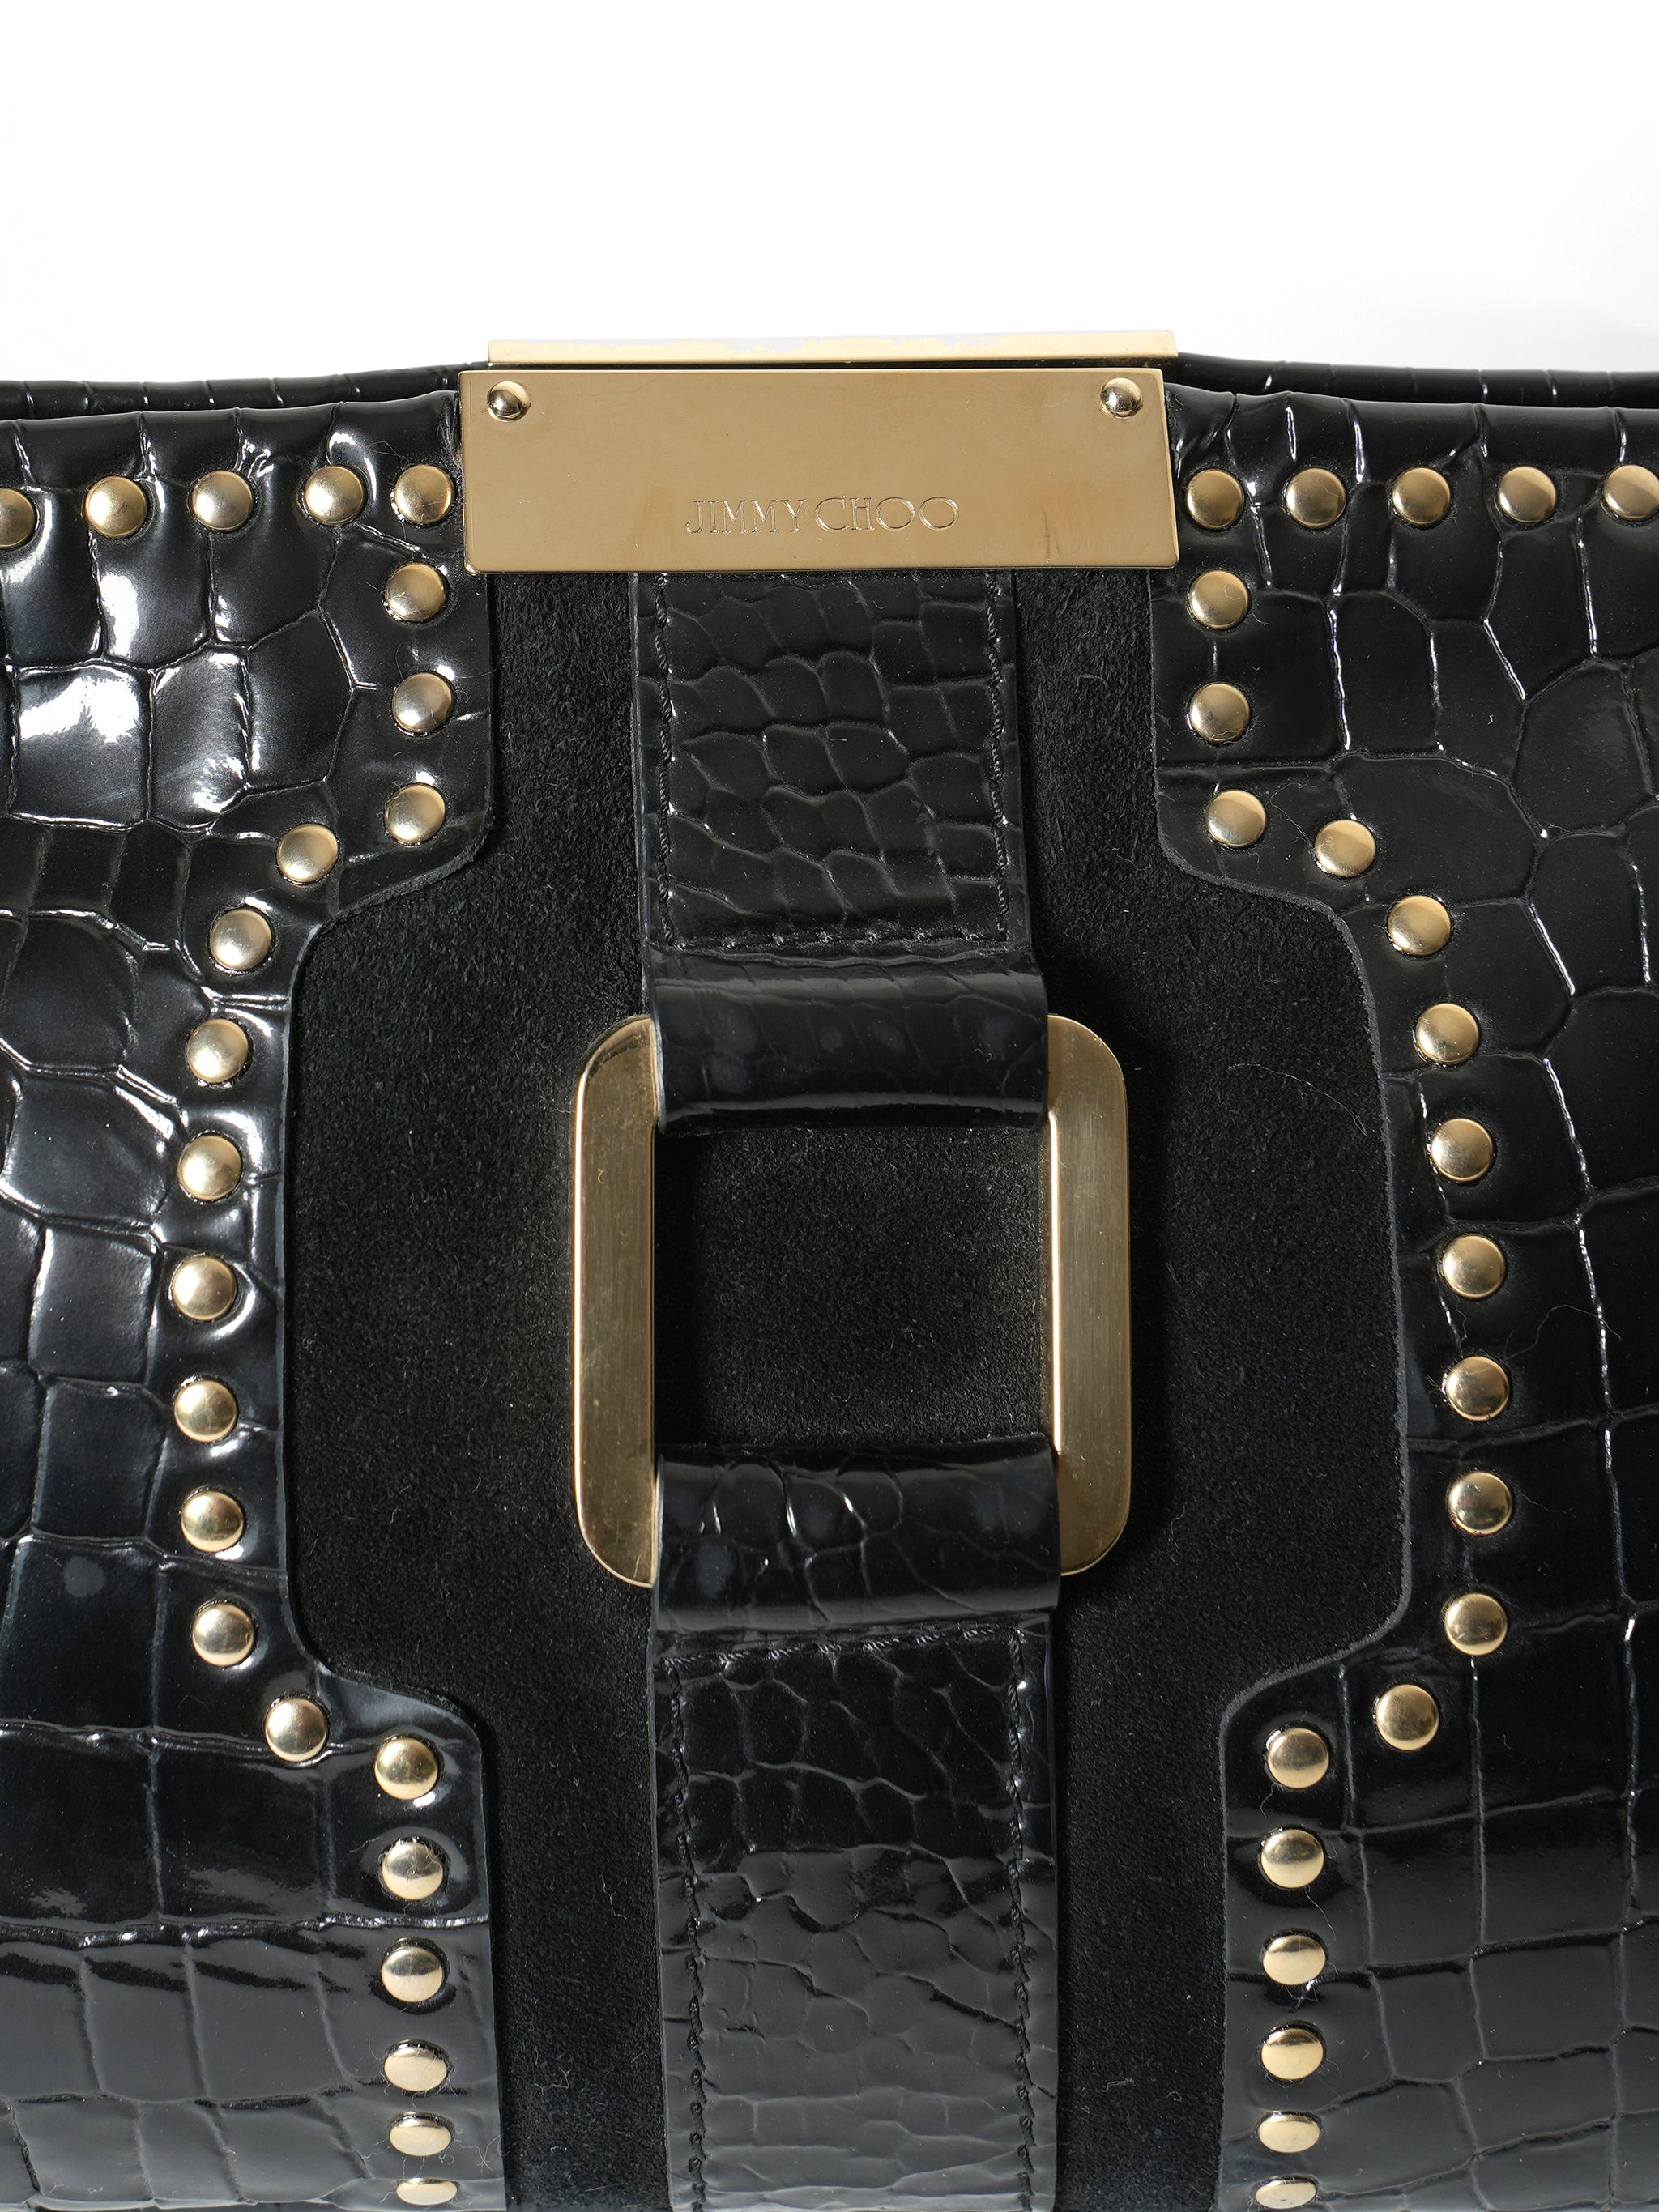 Jimmy Choo Black Patent leather Clutch